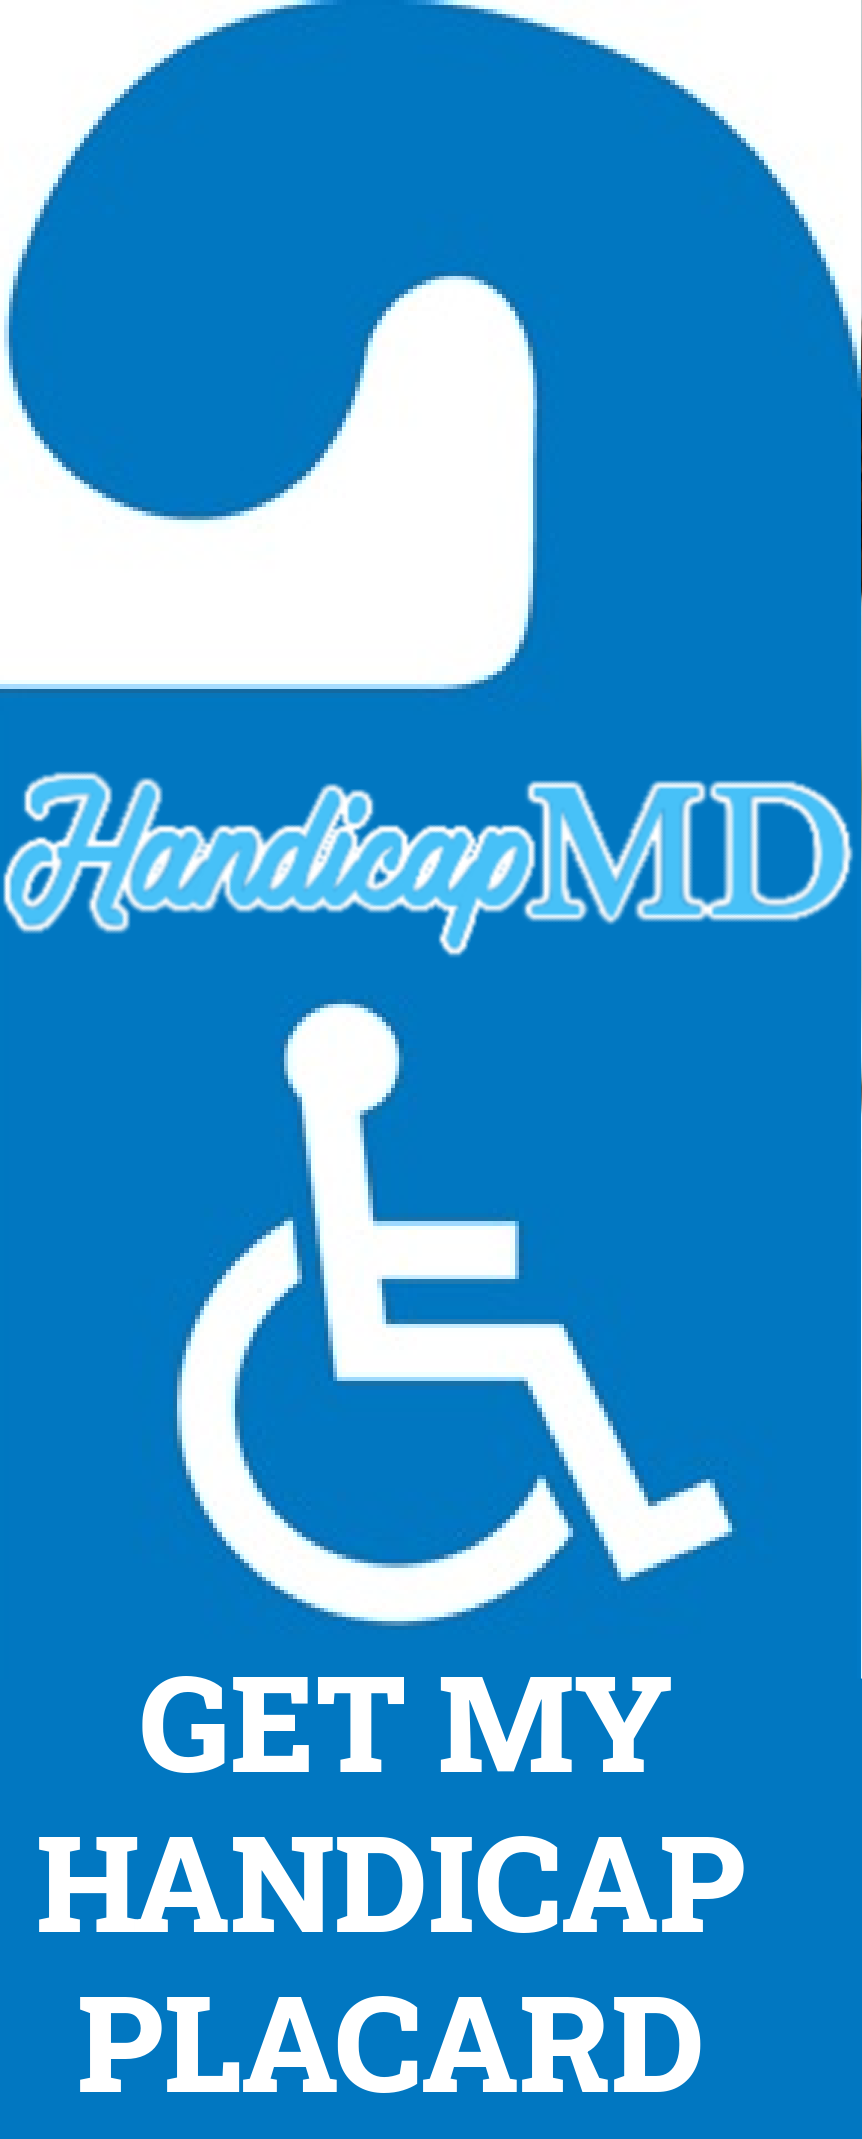 Indiana Handicap Parking Placards